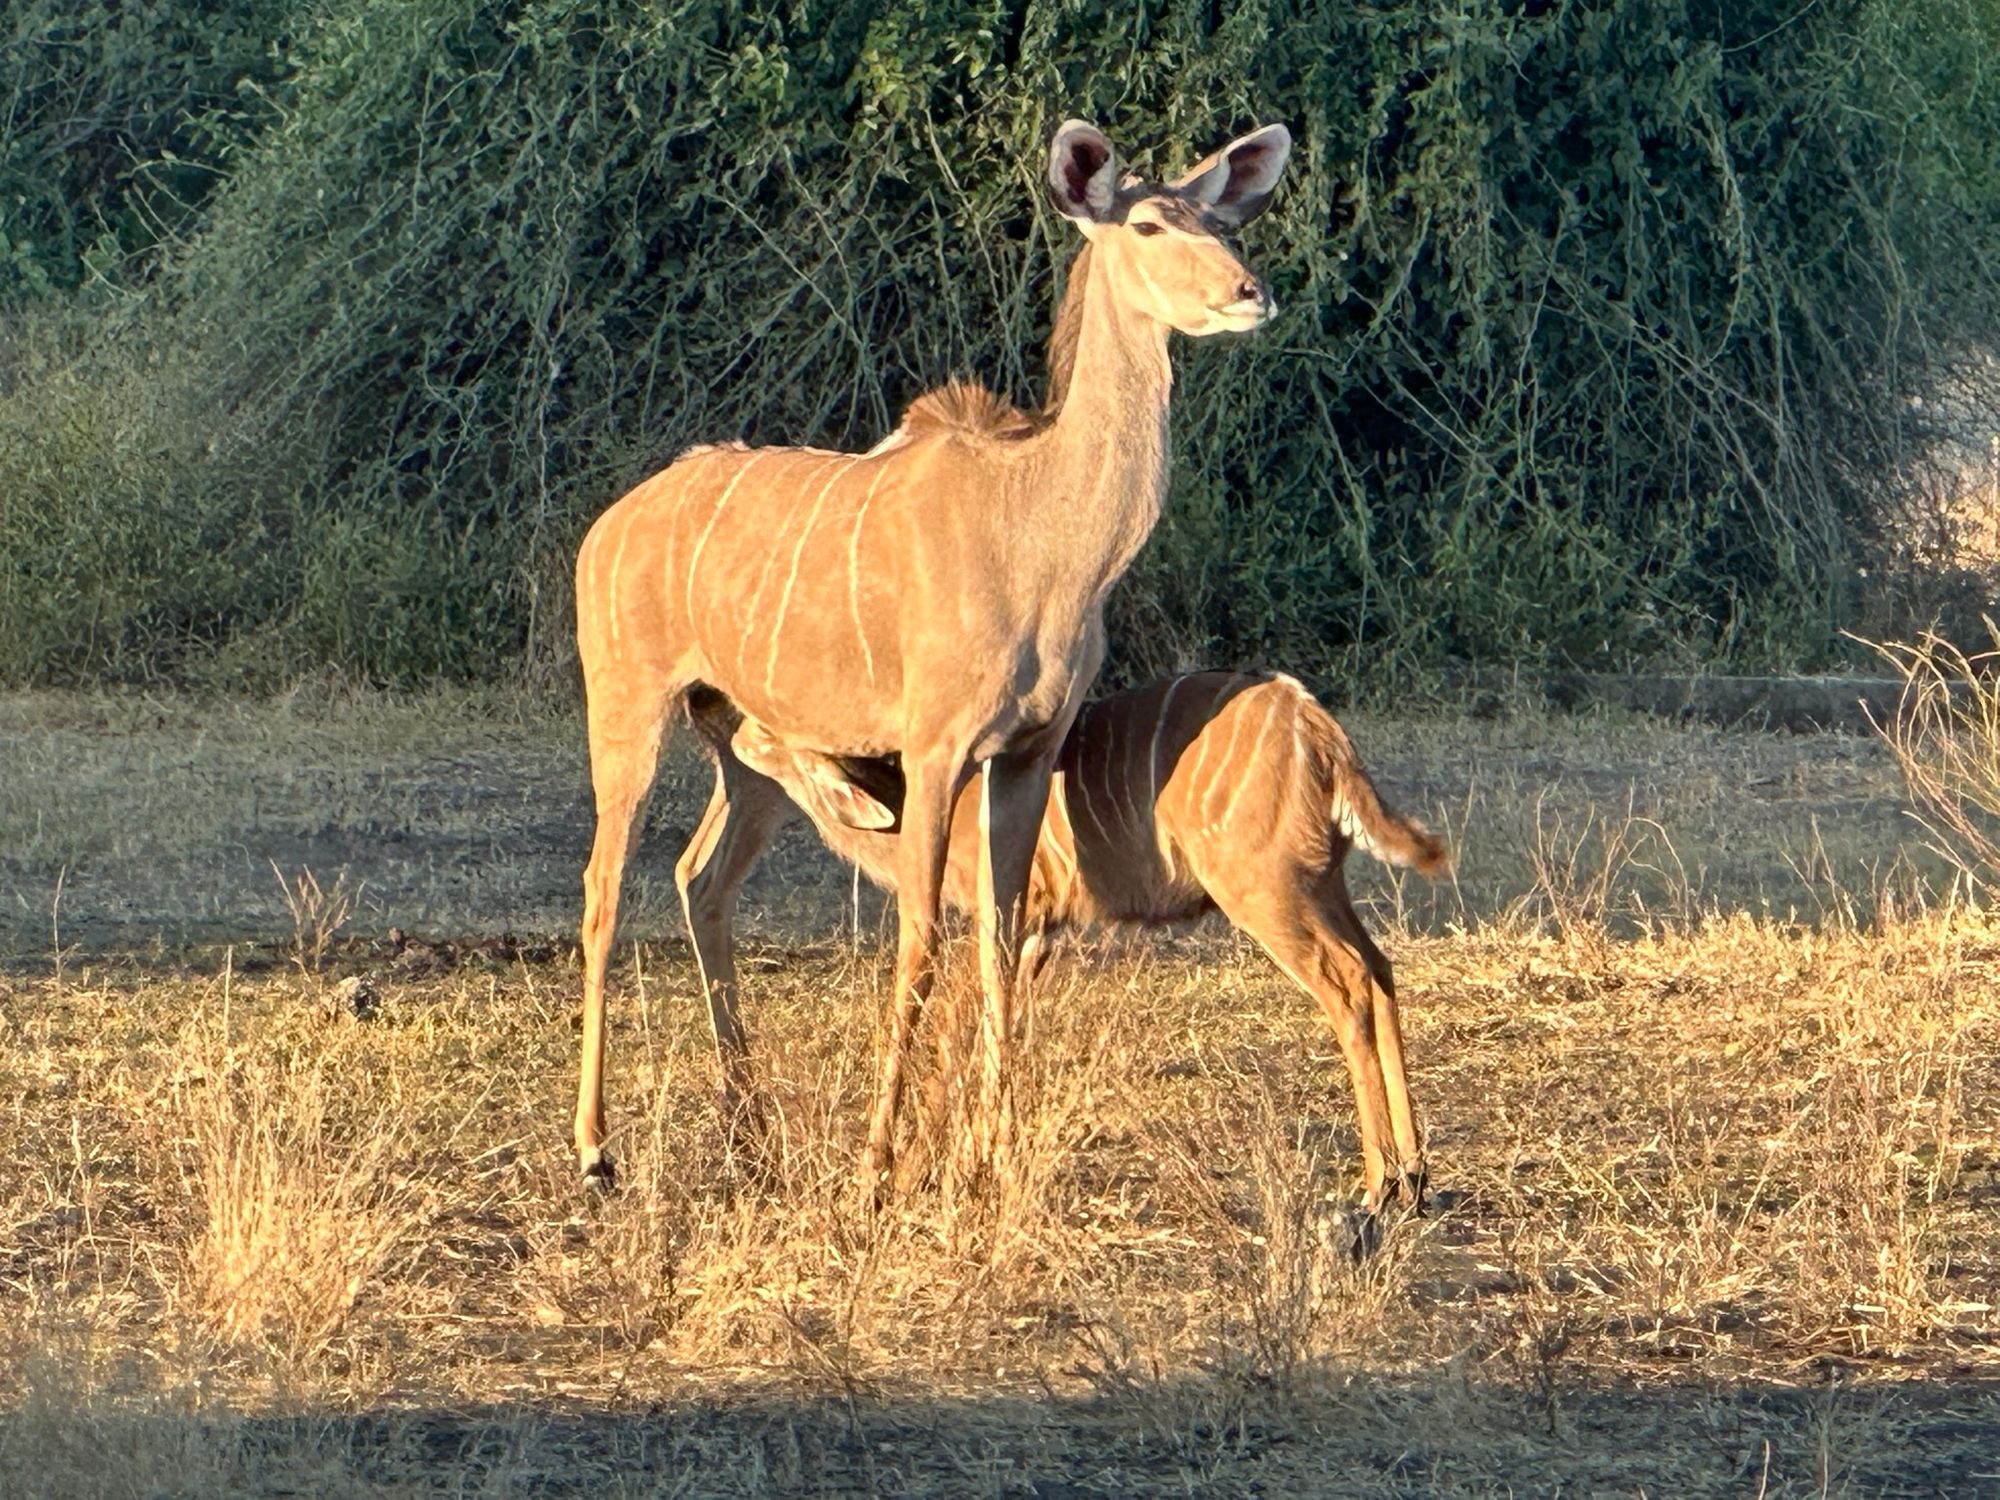 A baby impala feeding from its mother in Chobe National Park, Botswana